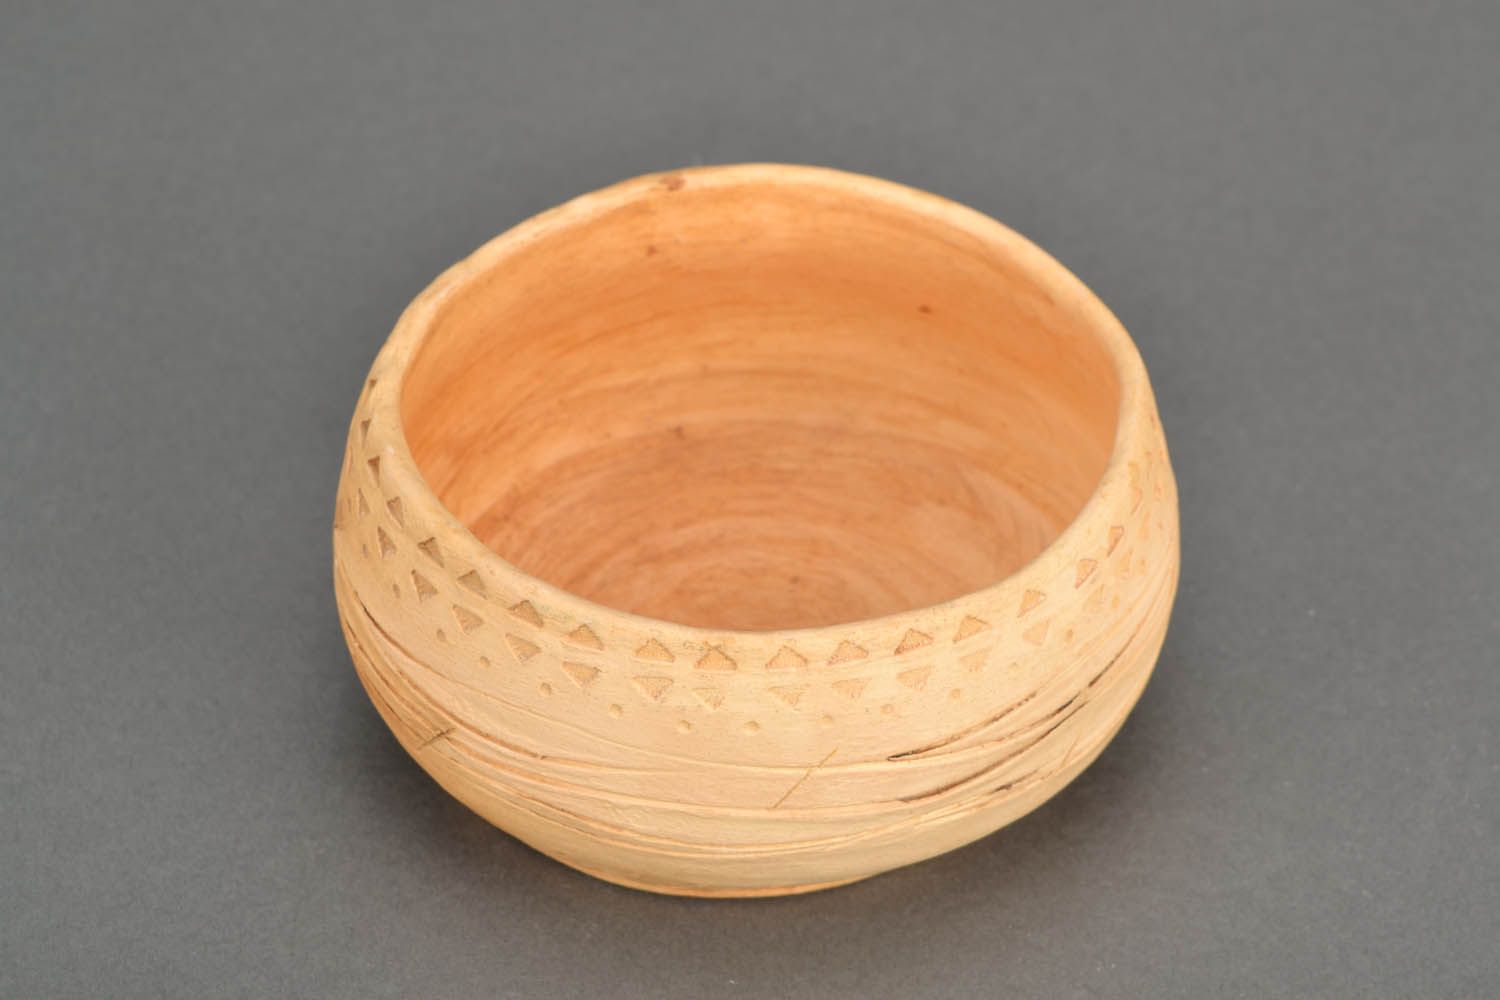 6 10 oz ceramic pitch bowl or ceramic bowl vase great handmade pottery 1 lb photo 4